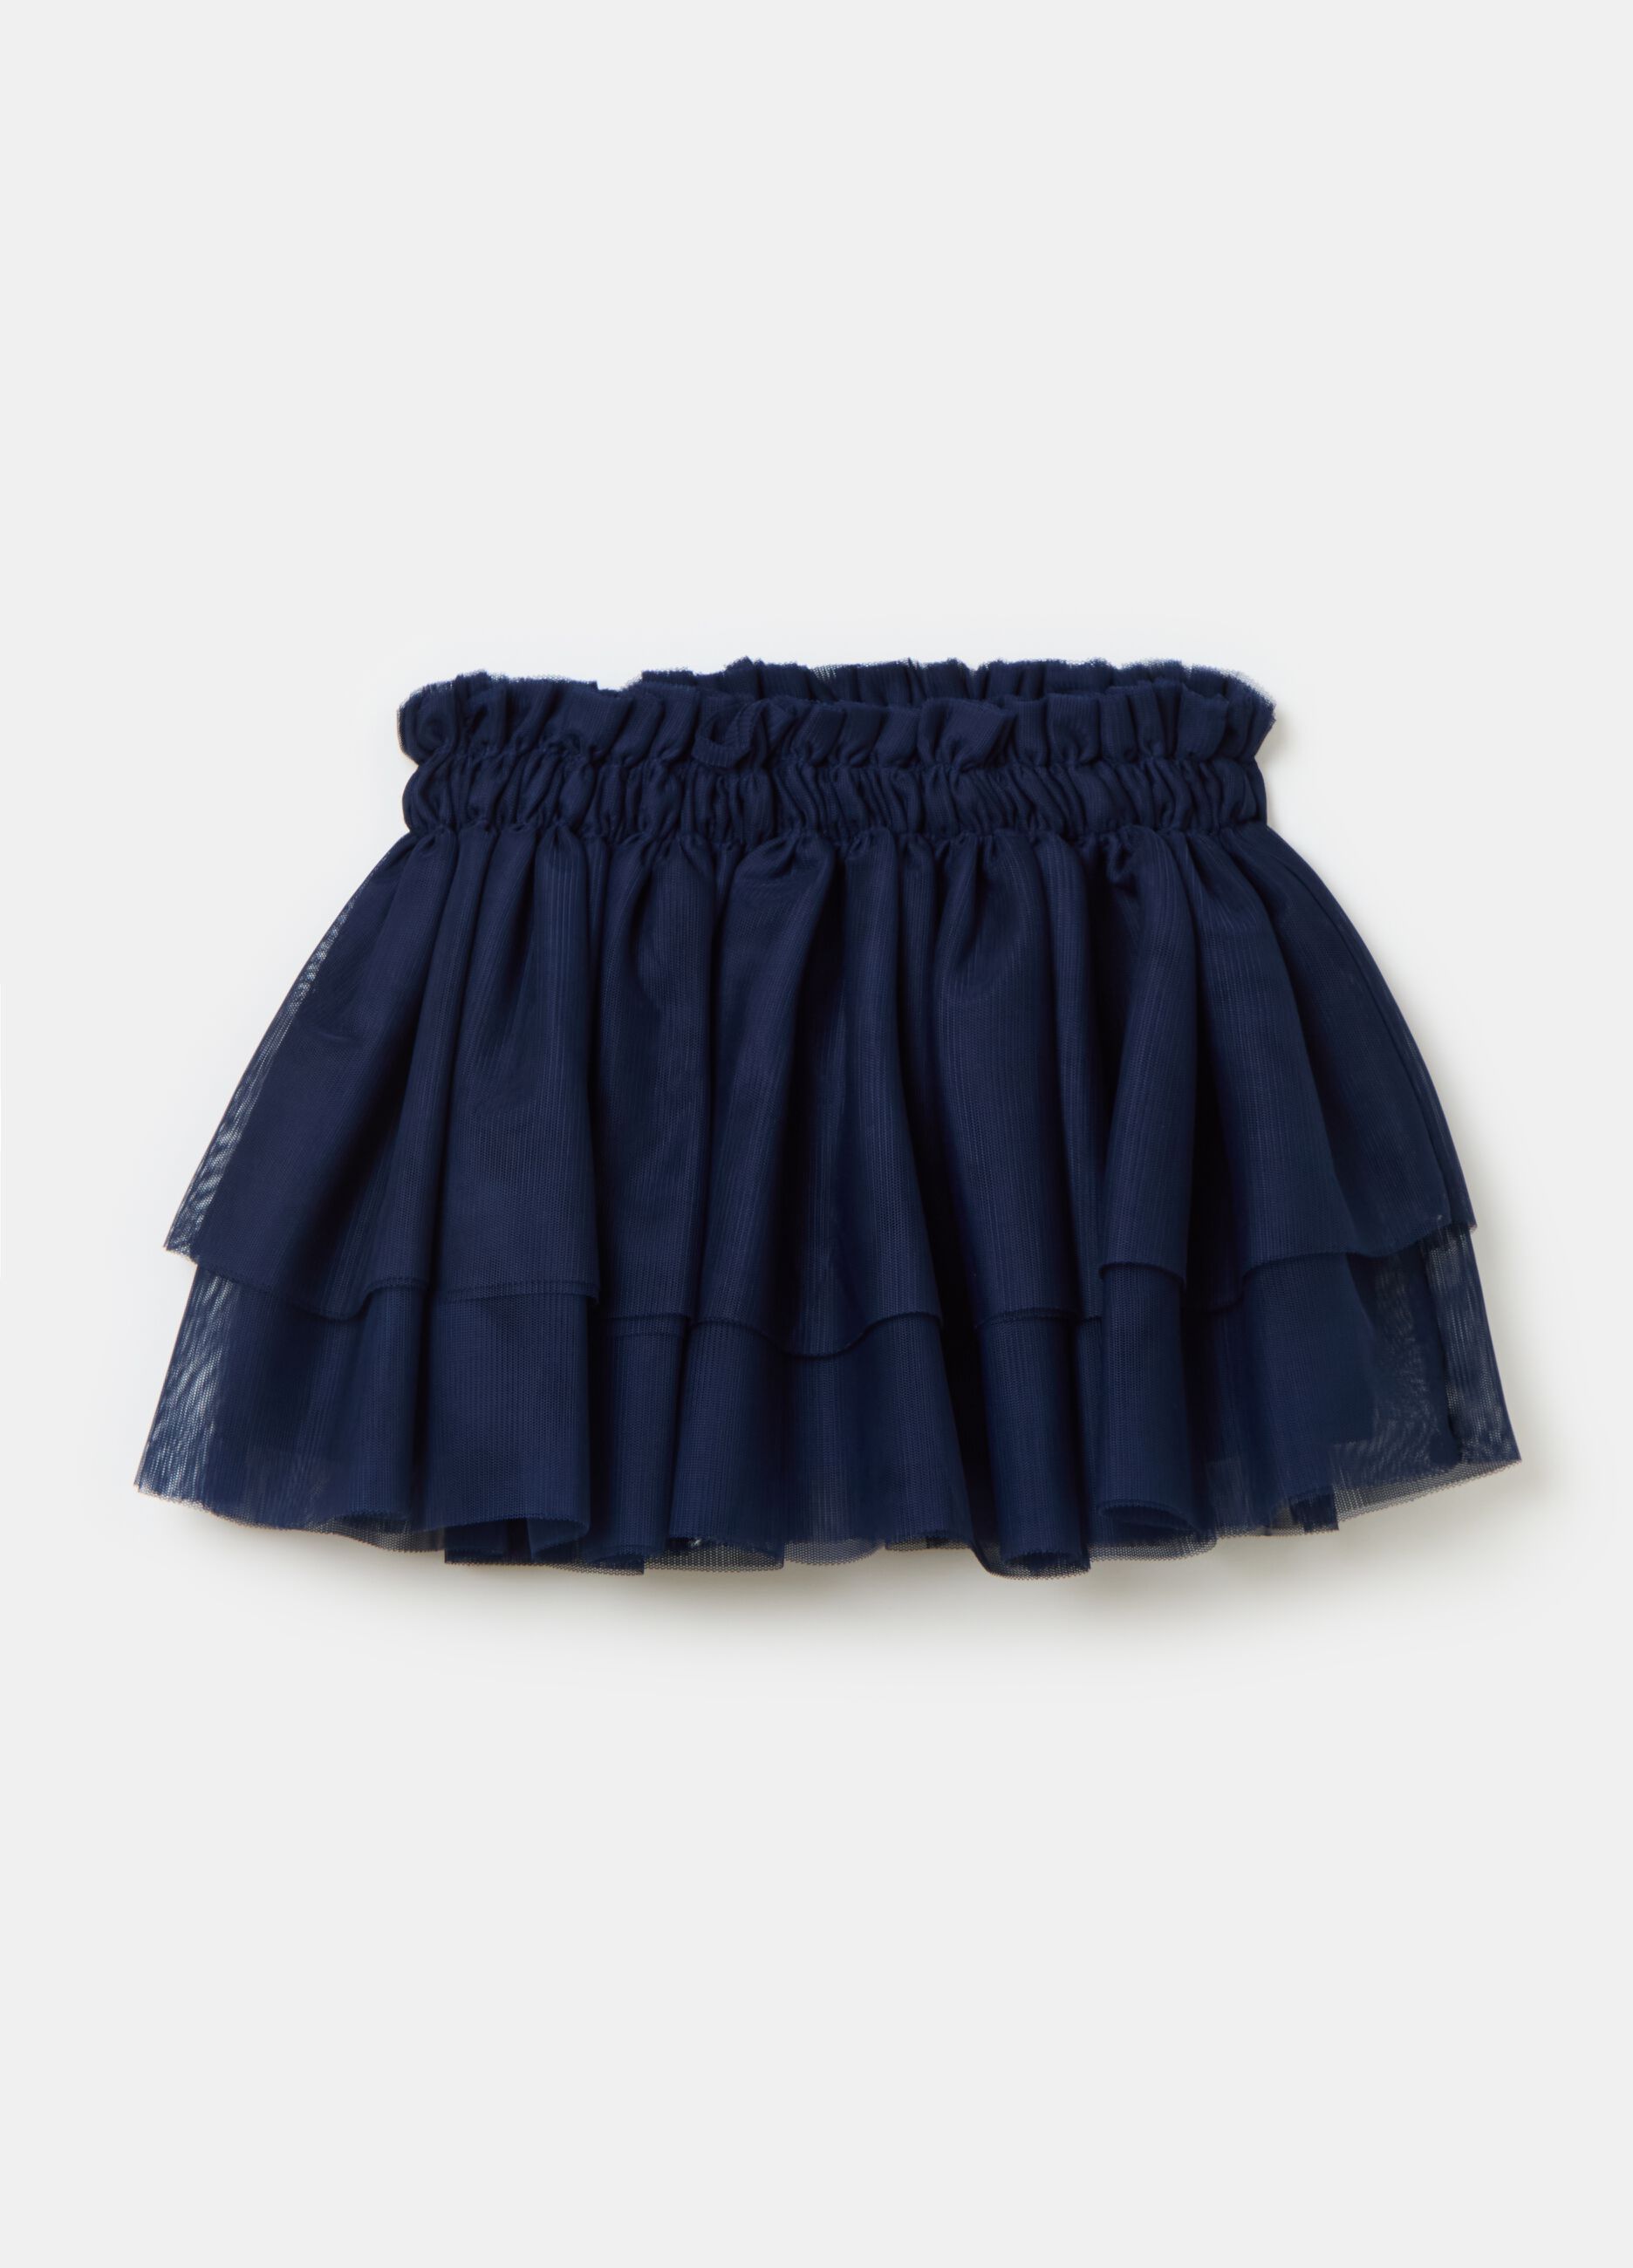 Tulle skirt with flounce